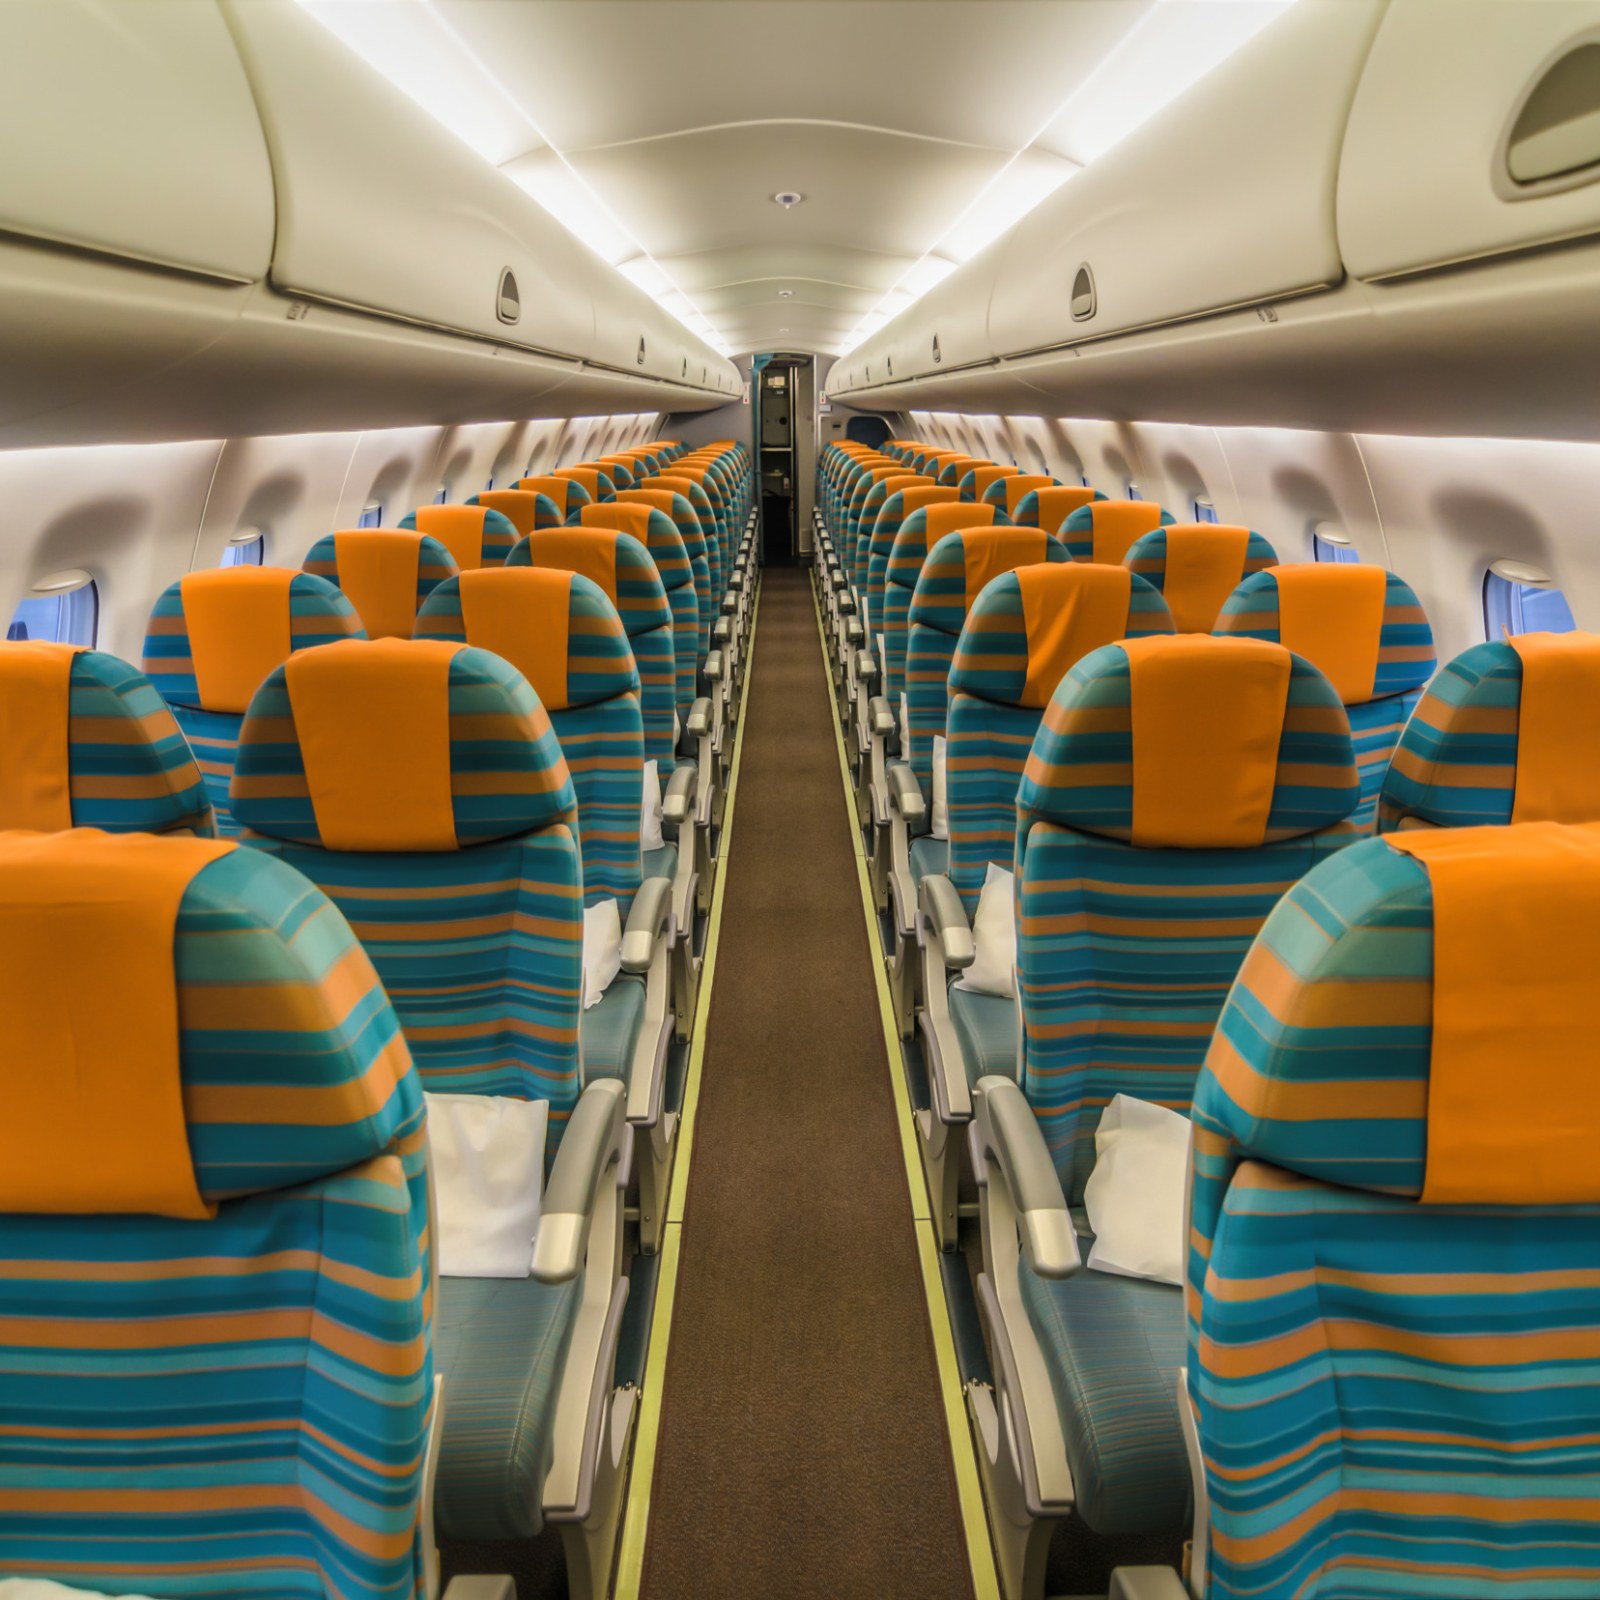 https://d.newsweek.com/en/full/2257572/colorful-patterned-seats-plane.jpg?w=1600&h=1600&q=88&f=e137c4b144f08610558698bc83e41f86